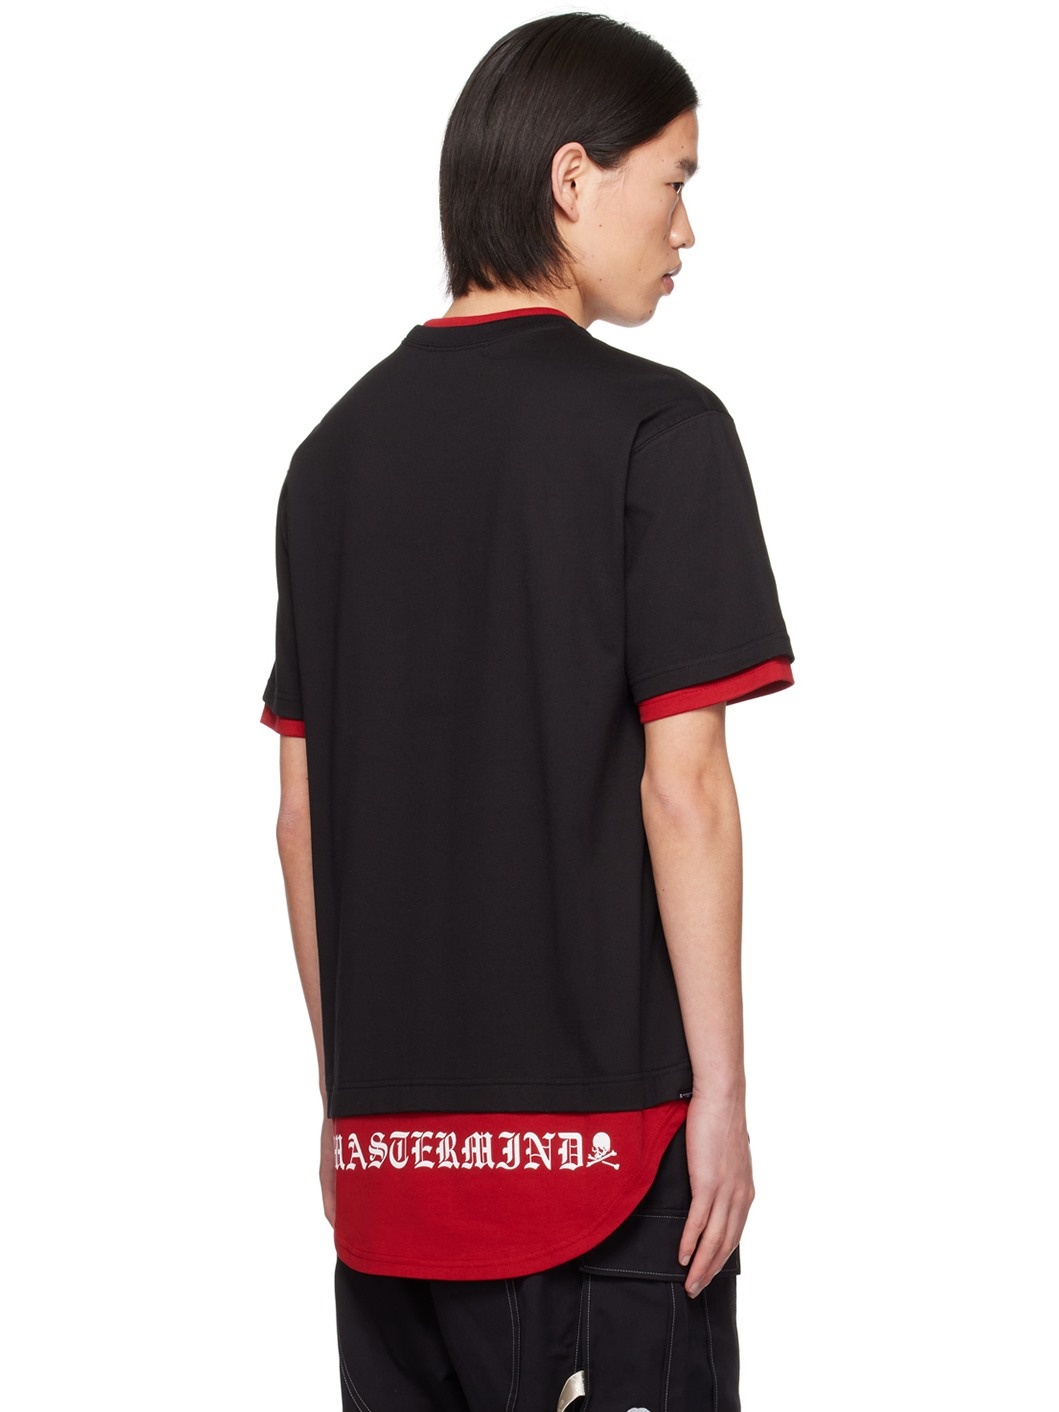 Black & Red Layered T-Shirt - 3